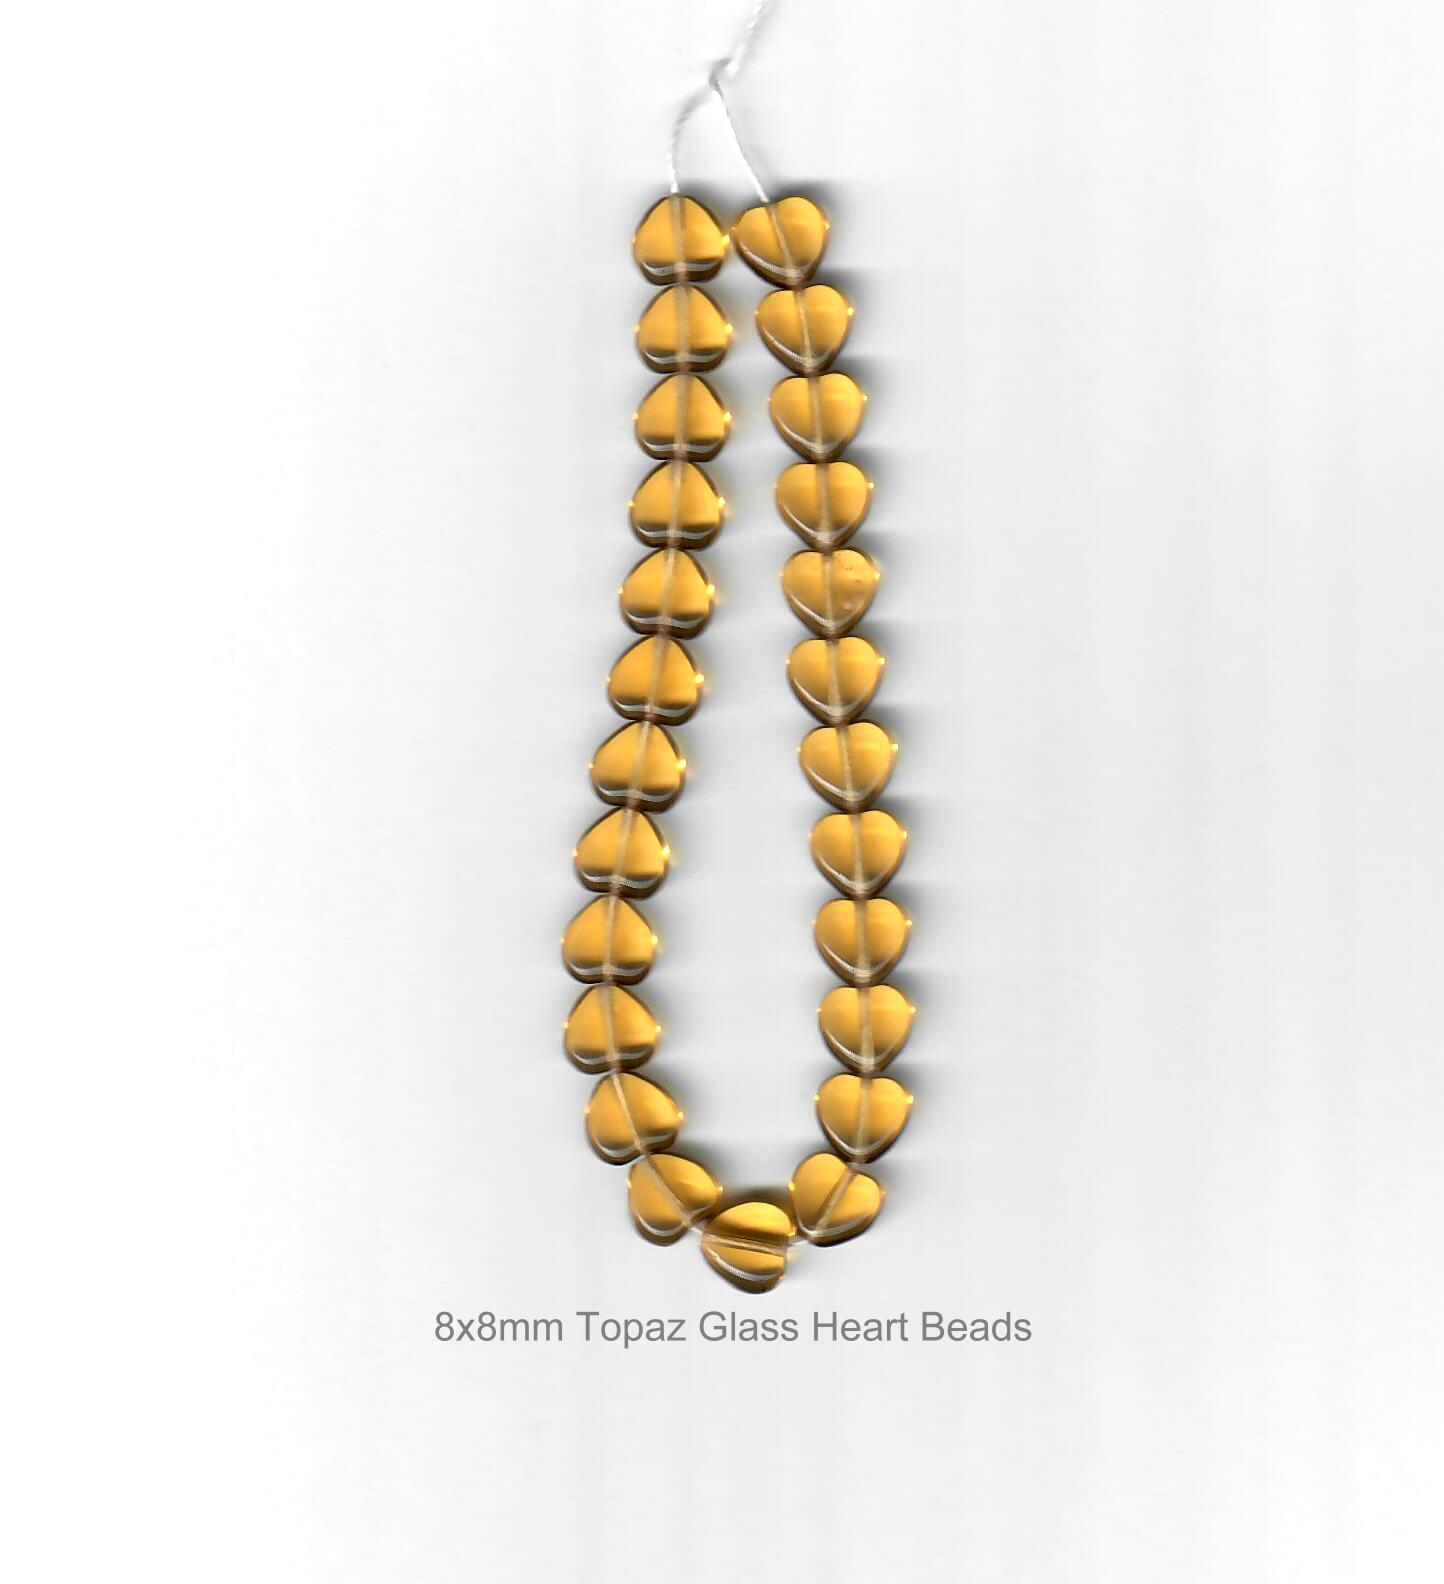 Topaz Glass Heart shaped beads